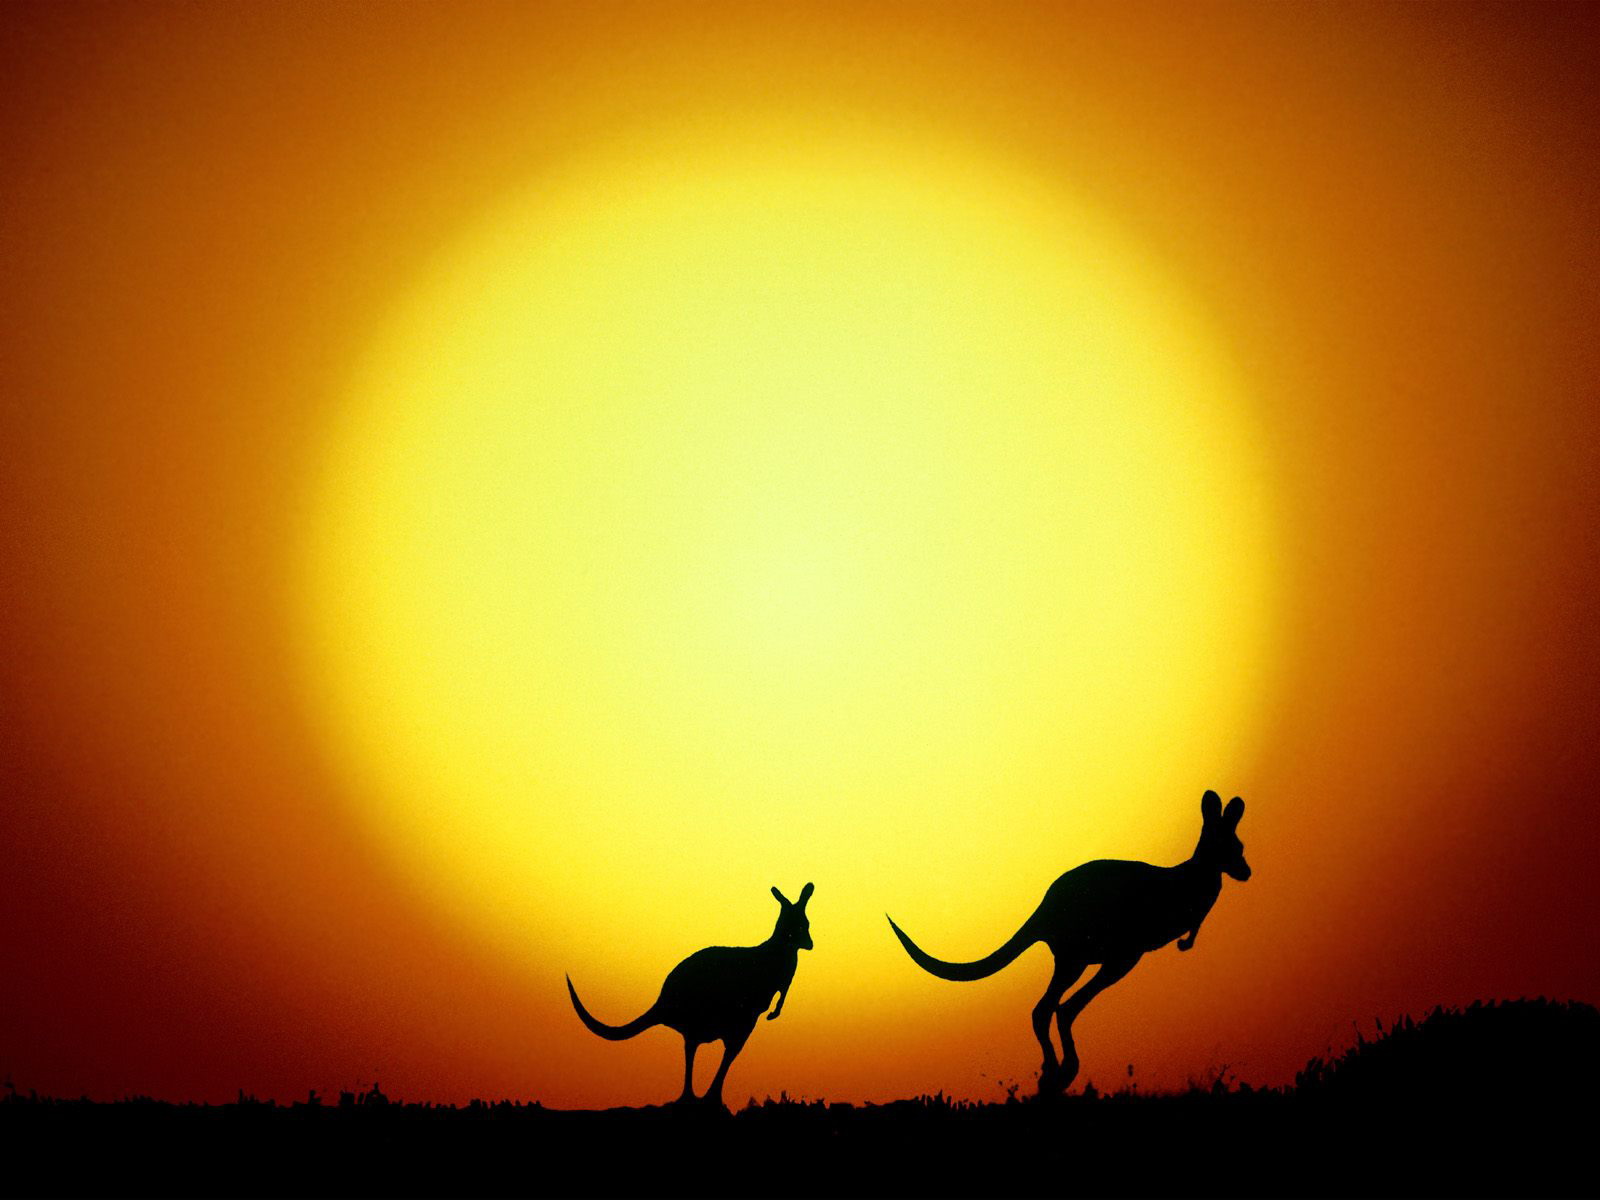 australia iphone wallpaper,sky,wildlife,silhouette,sunset,landscape